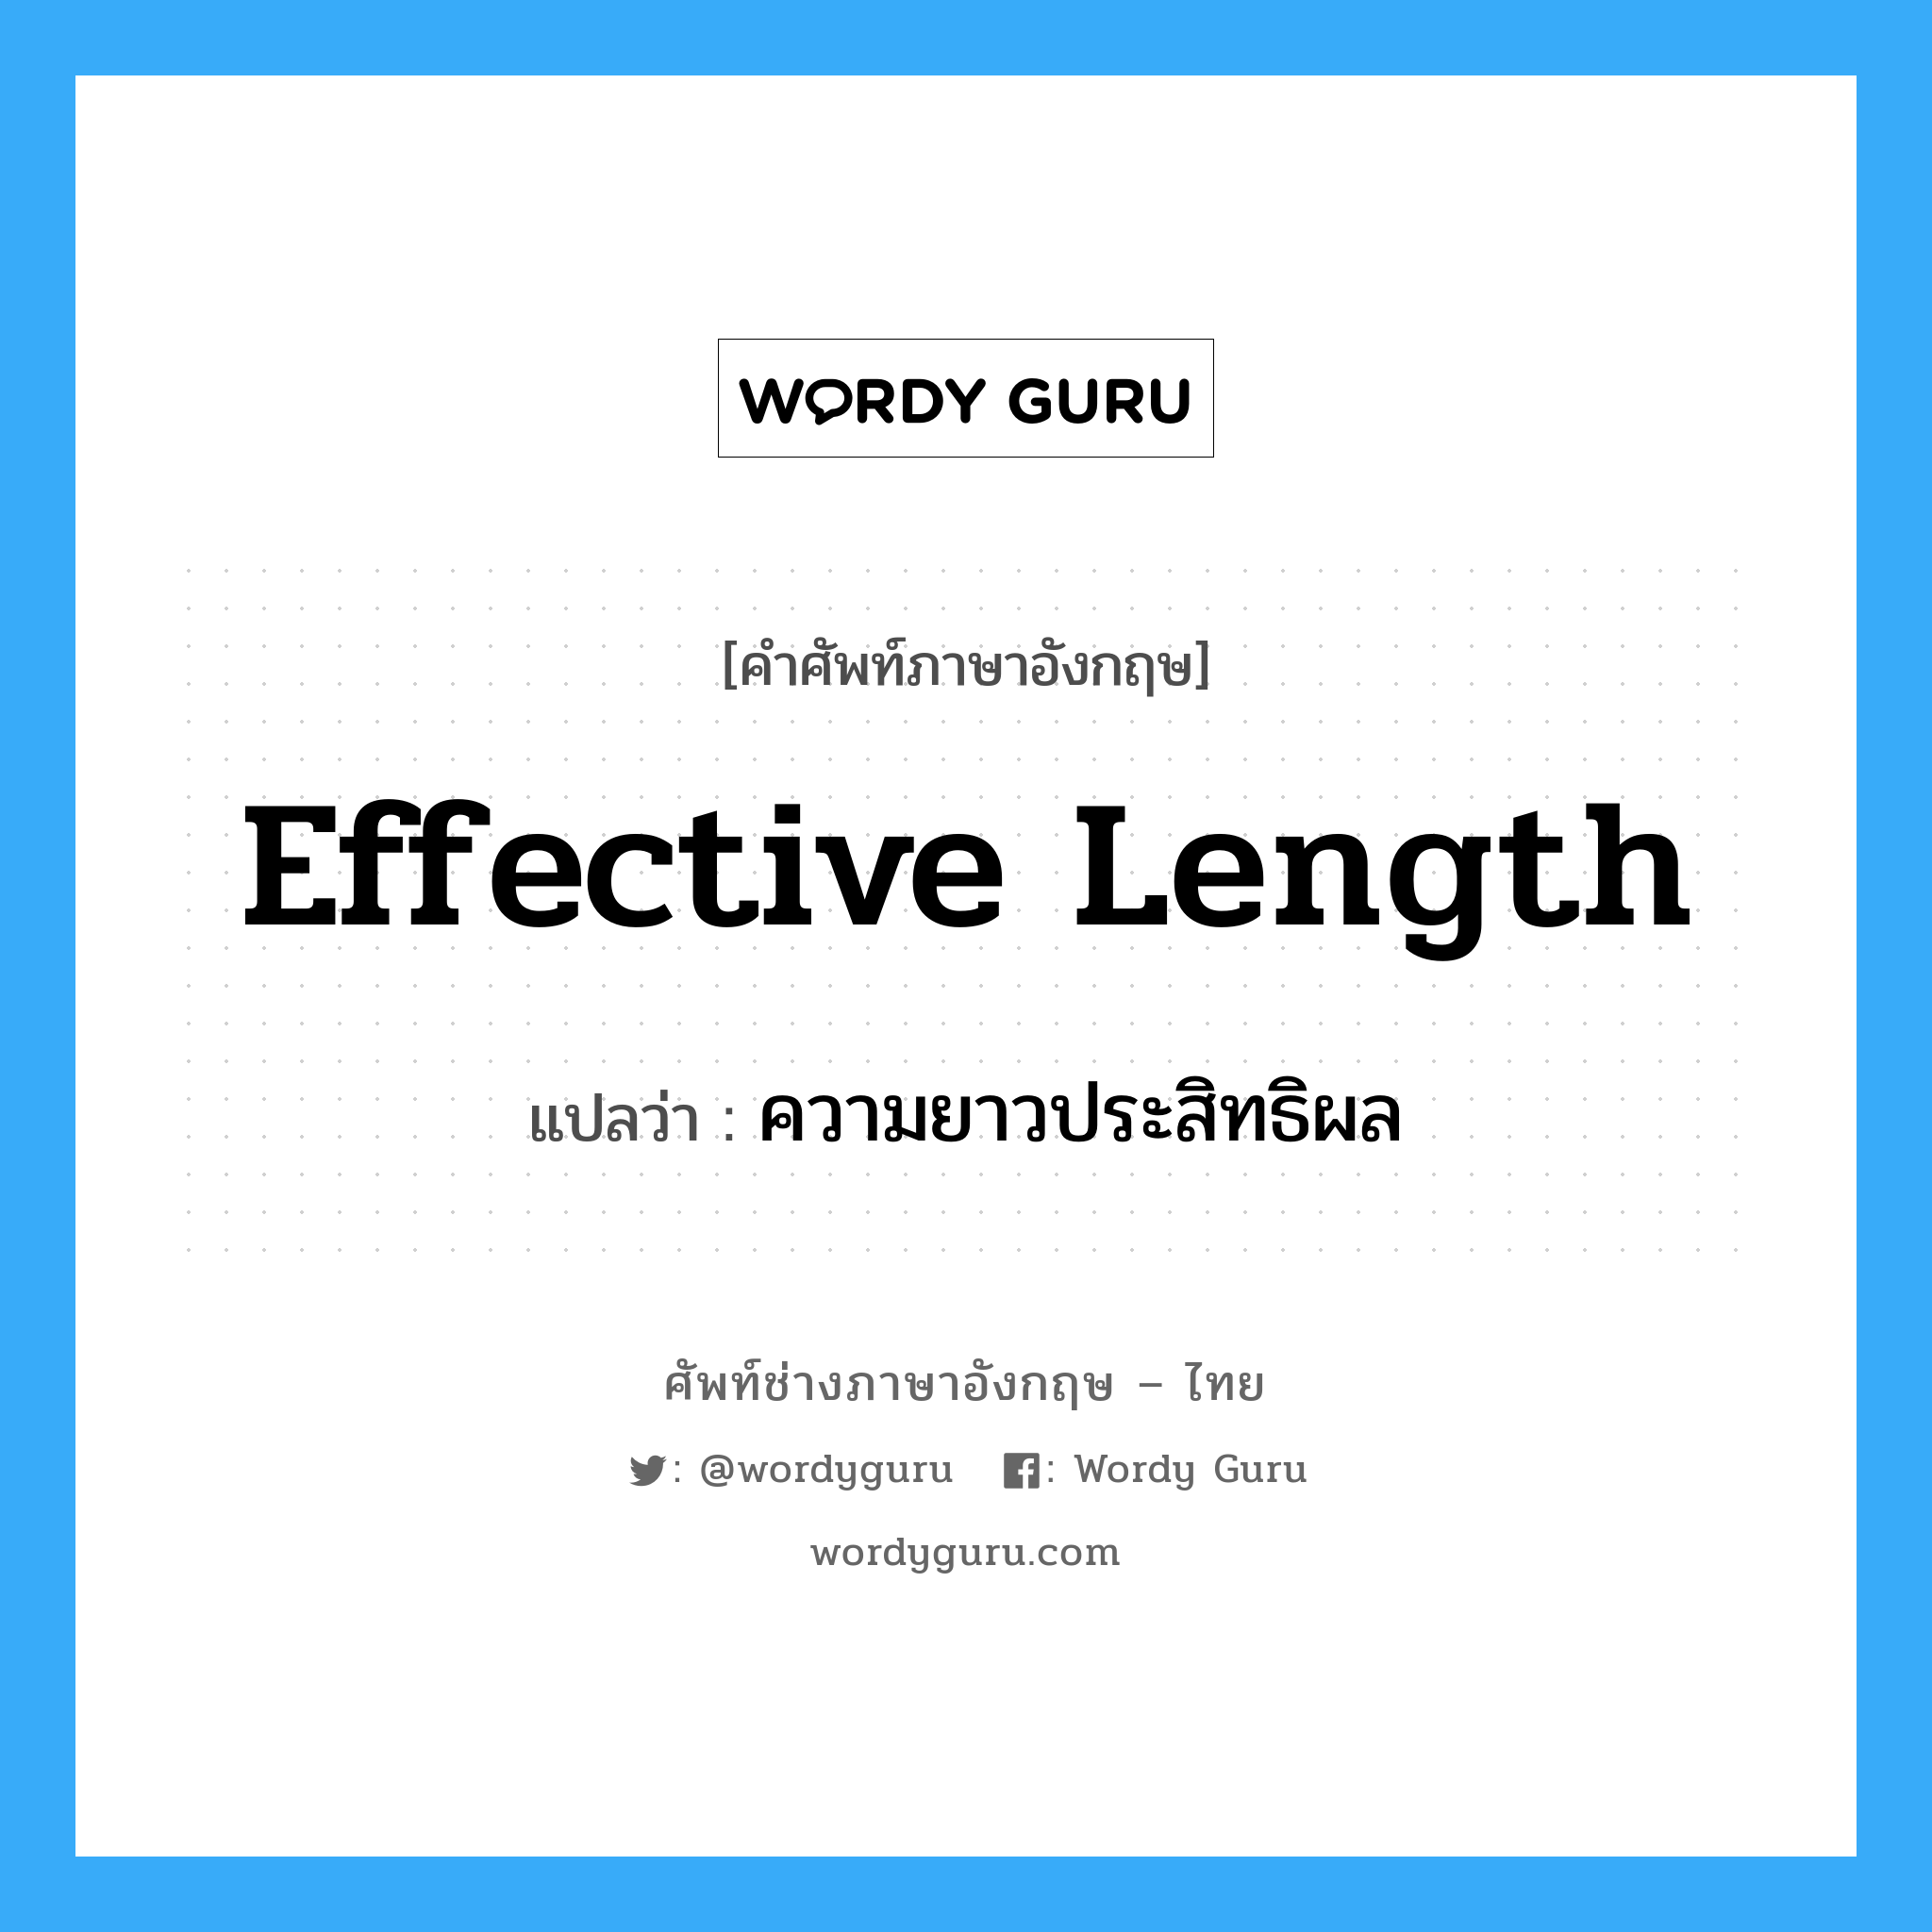 effective length แปลว่า?, คำศัพท์ช่างภาษาอังกฤษ - ไทย effective length คำศัพท์ภาษาอังกฤษ effective length แปลว่า ความยาวประสิทธิผล